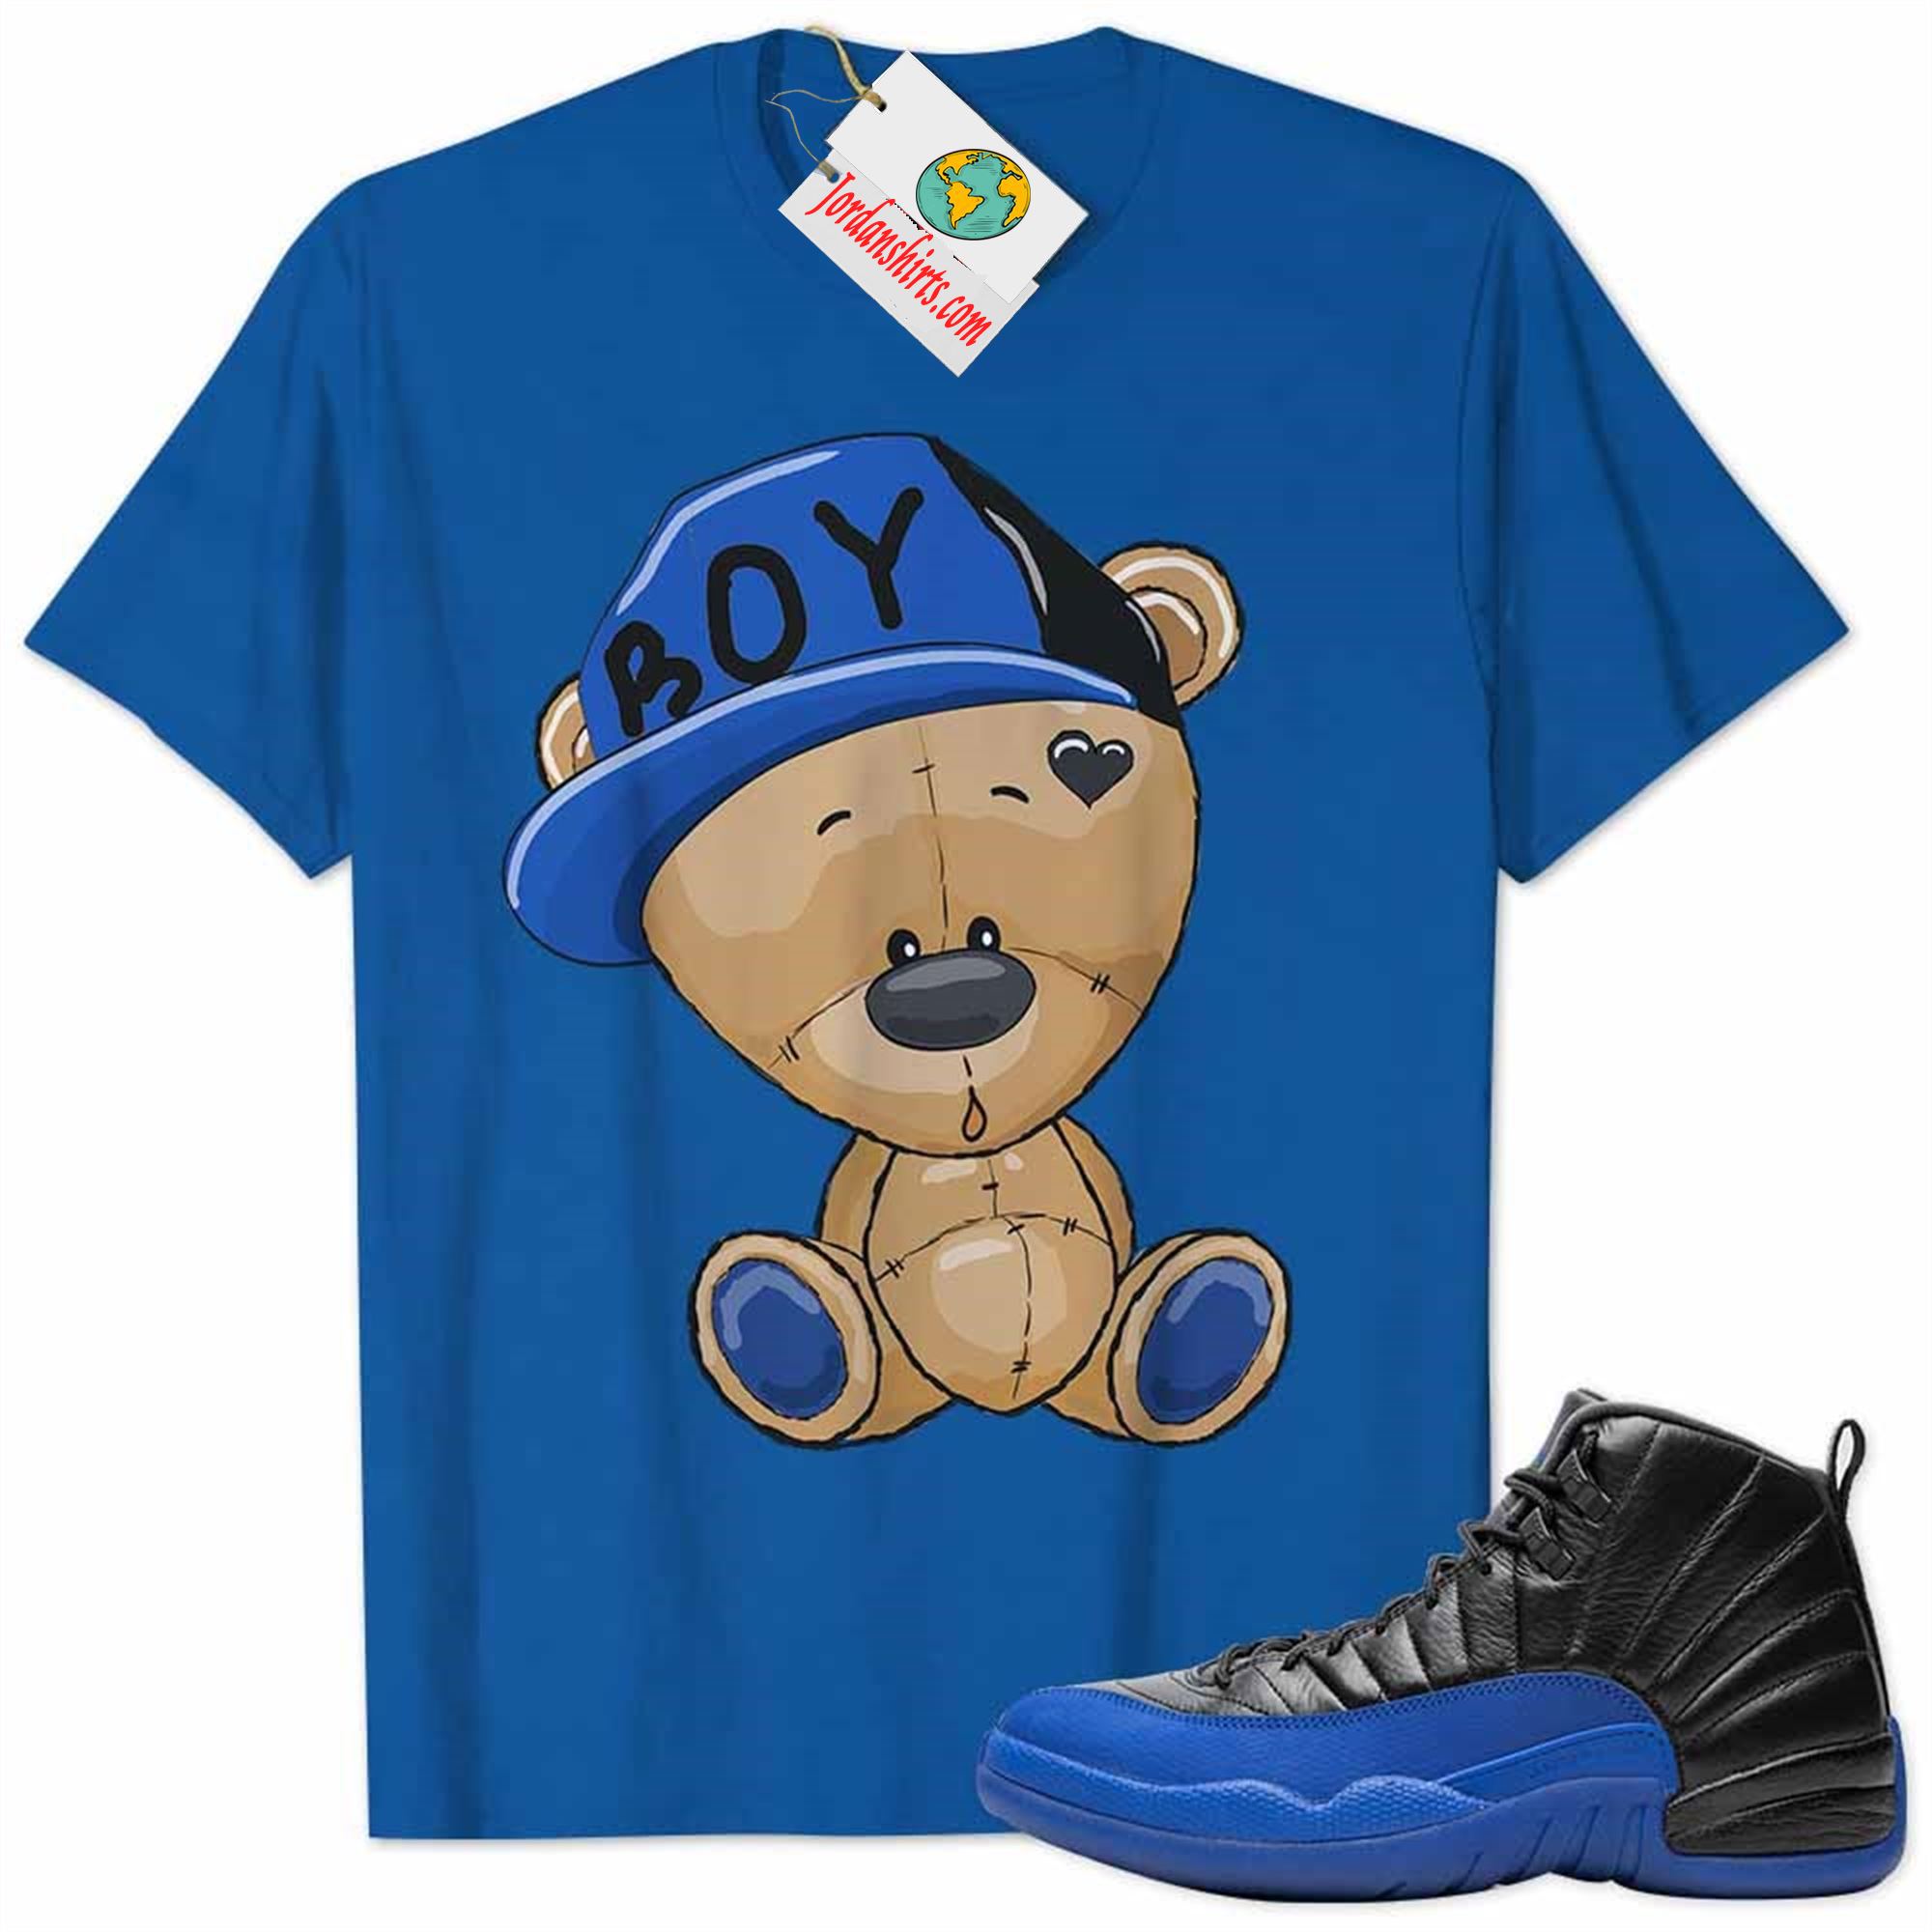 Jordan 12 Shirt, Jordan 12 Game Royal Shirt Cute Baby Teddy Bear Royal Plus Size Up To 5xl